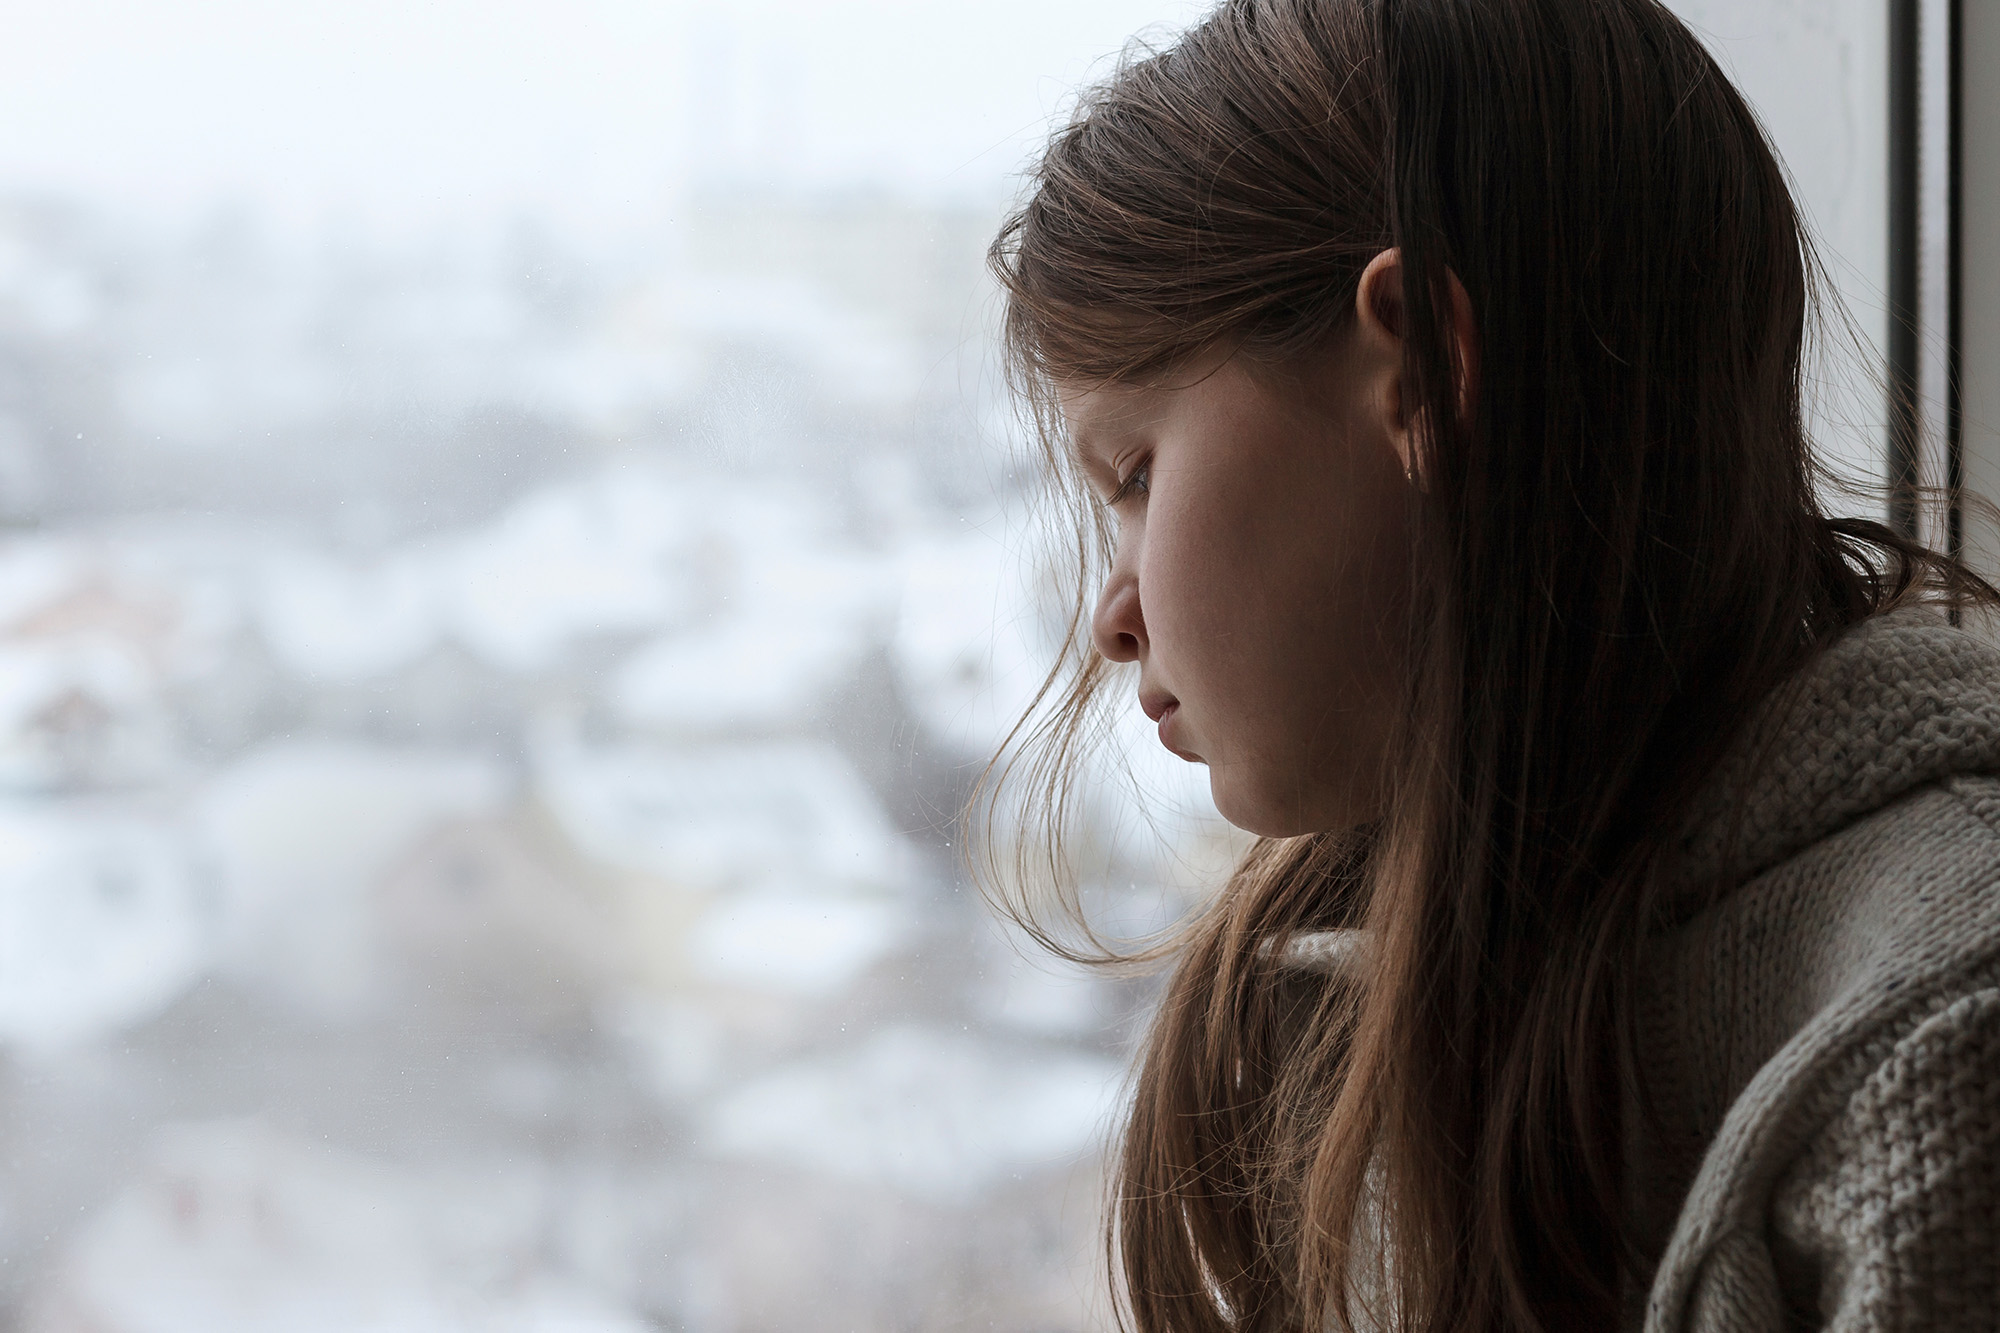 Can Childhood Trauma Lead to Codependency and PTSD